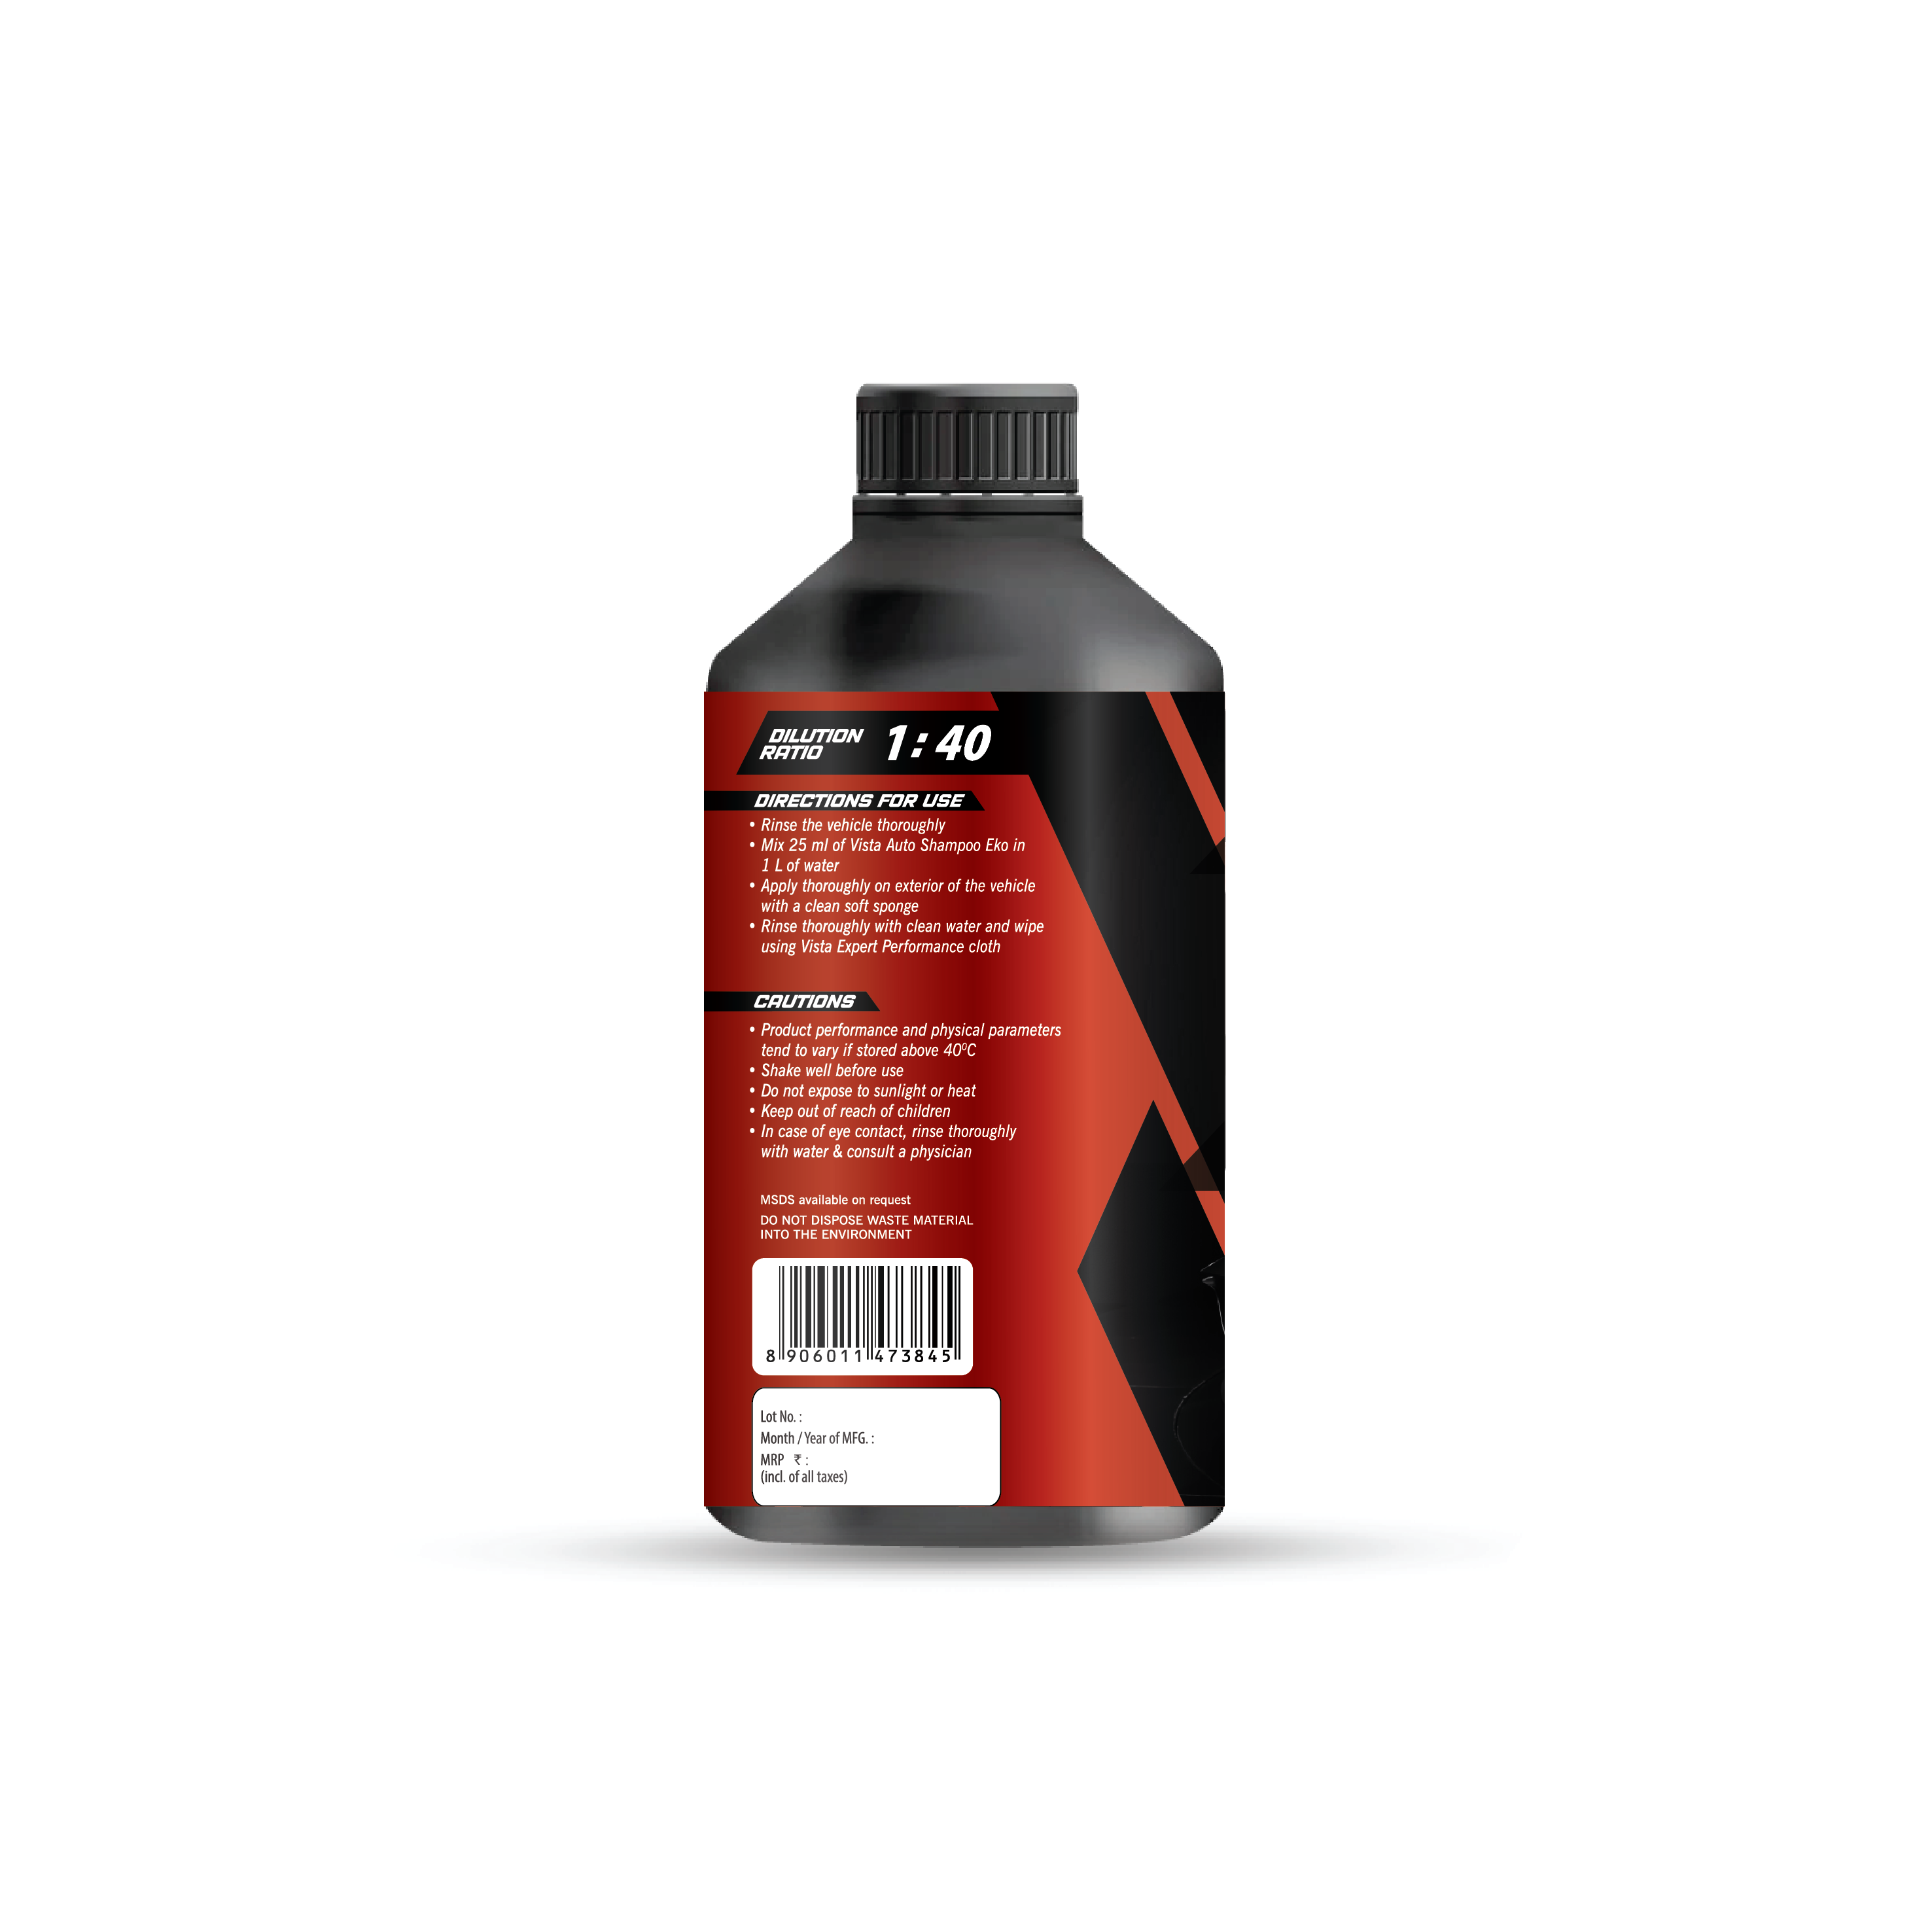 Auto Shampoo Eko 1 L - pH Balance Formula, For Car and Bike